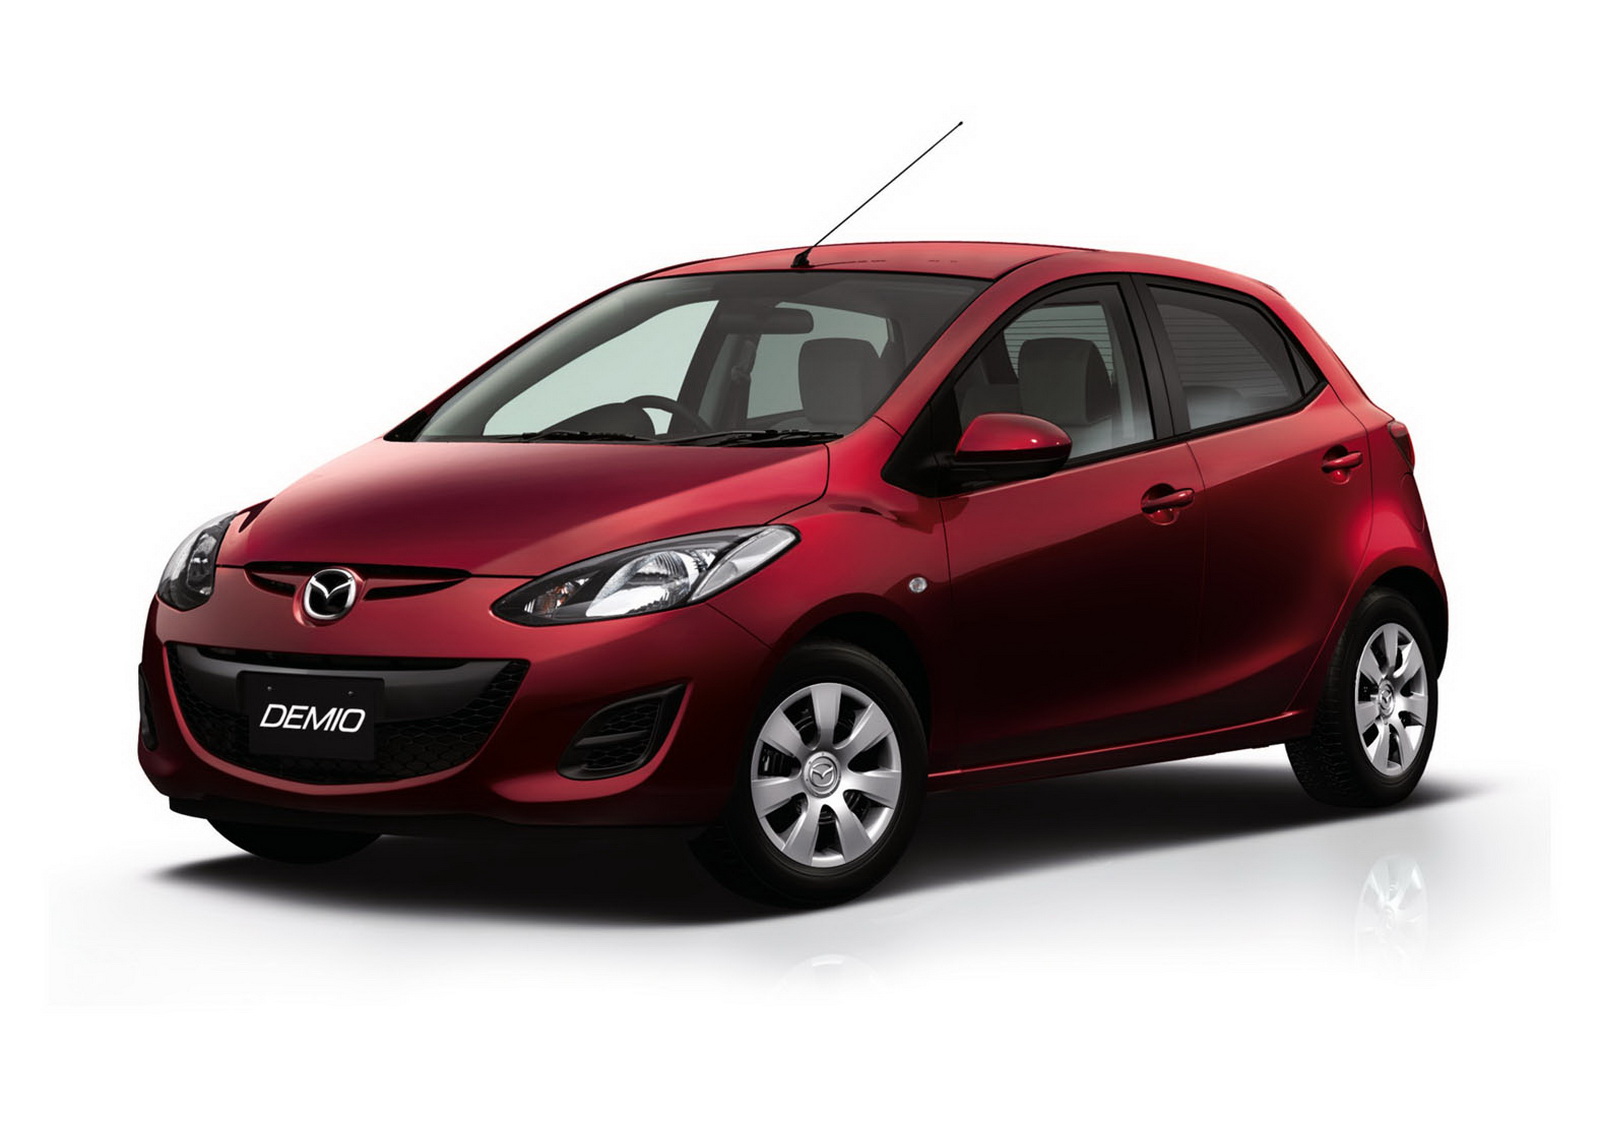 Mazda Motor Corporation released the Mazda Demio 13C-V Smart Edition in